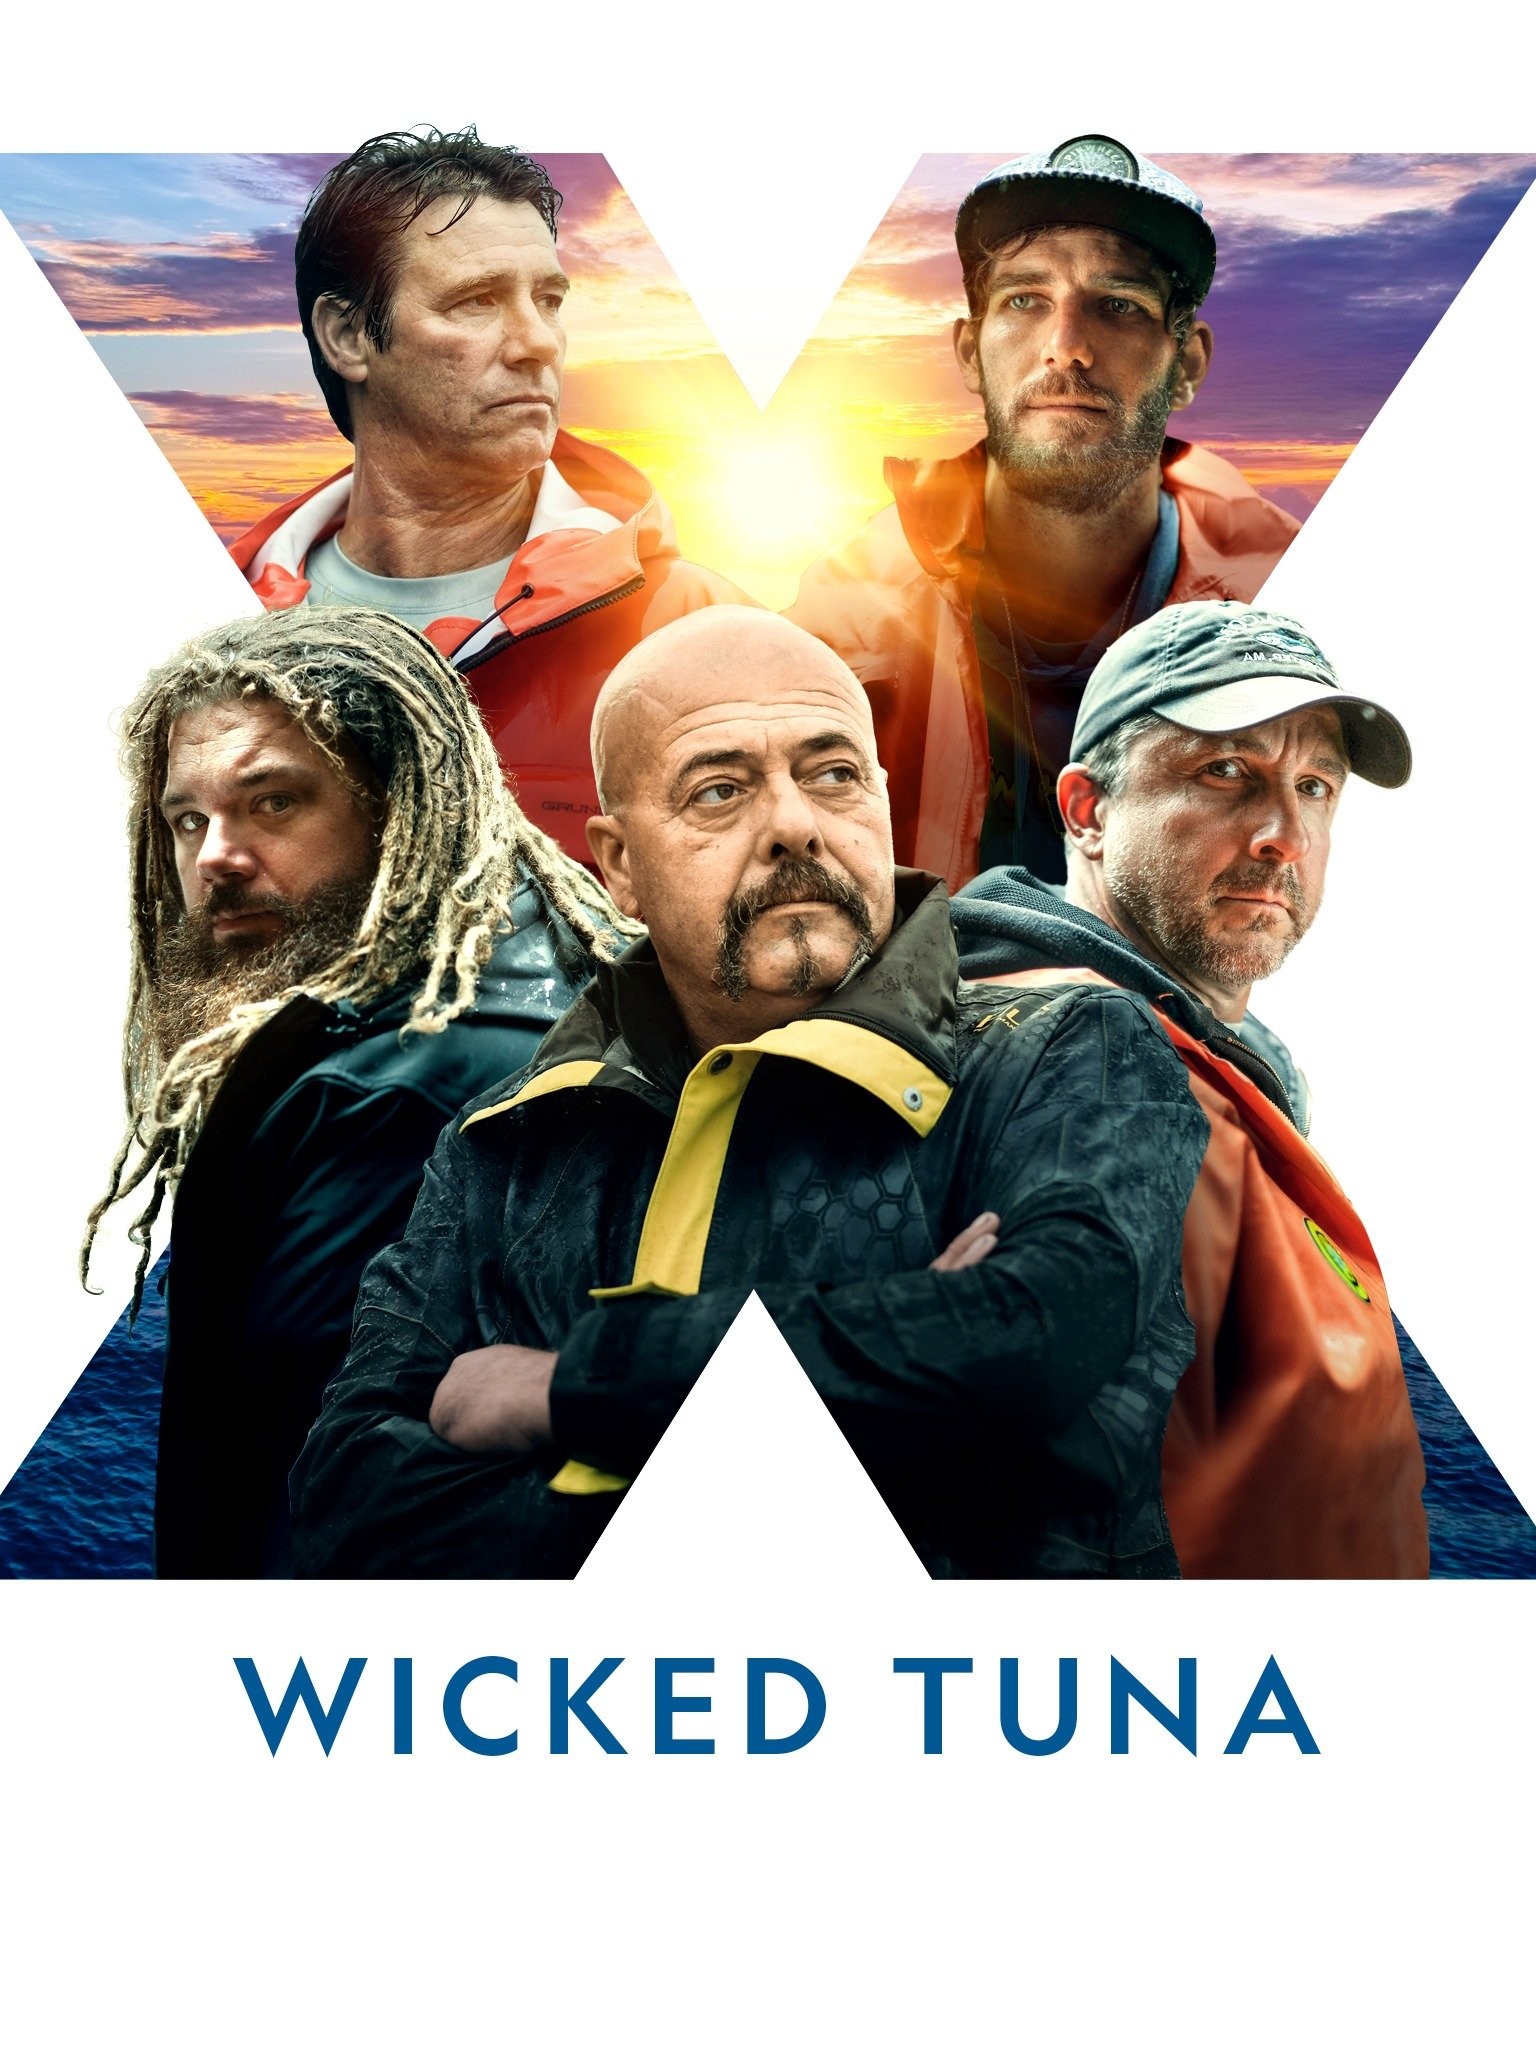 Wicked Tuna: Season 10